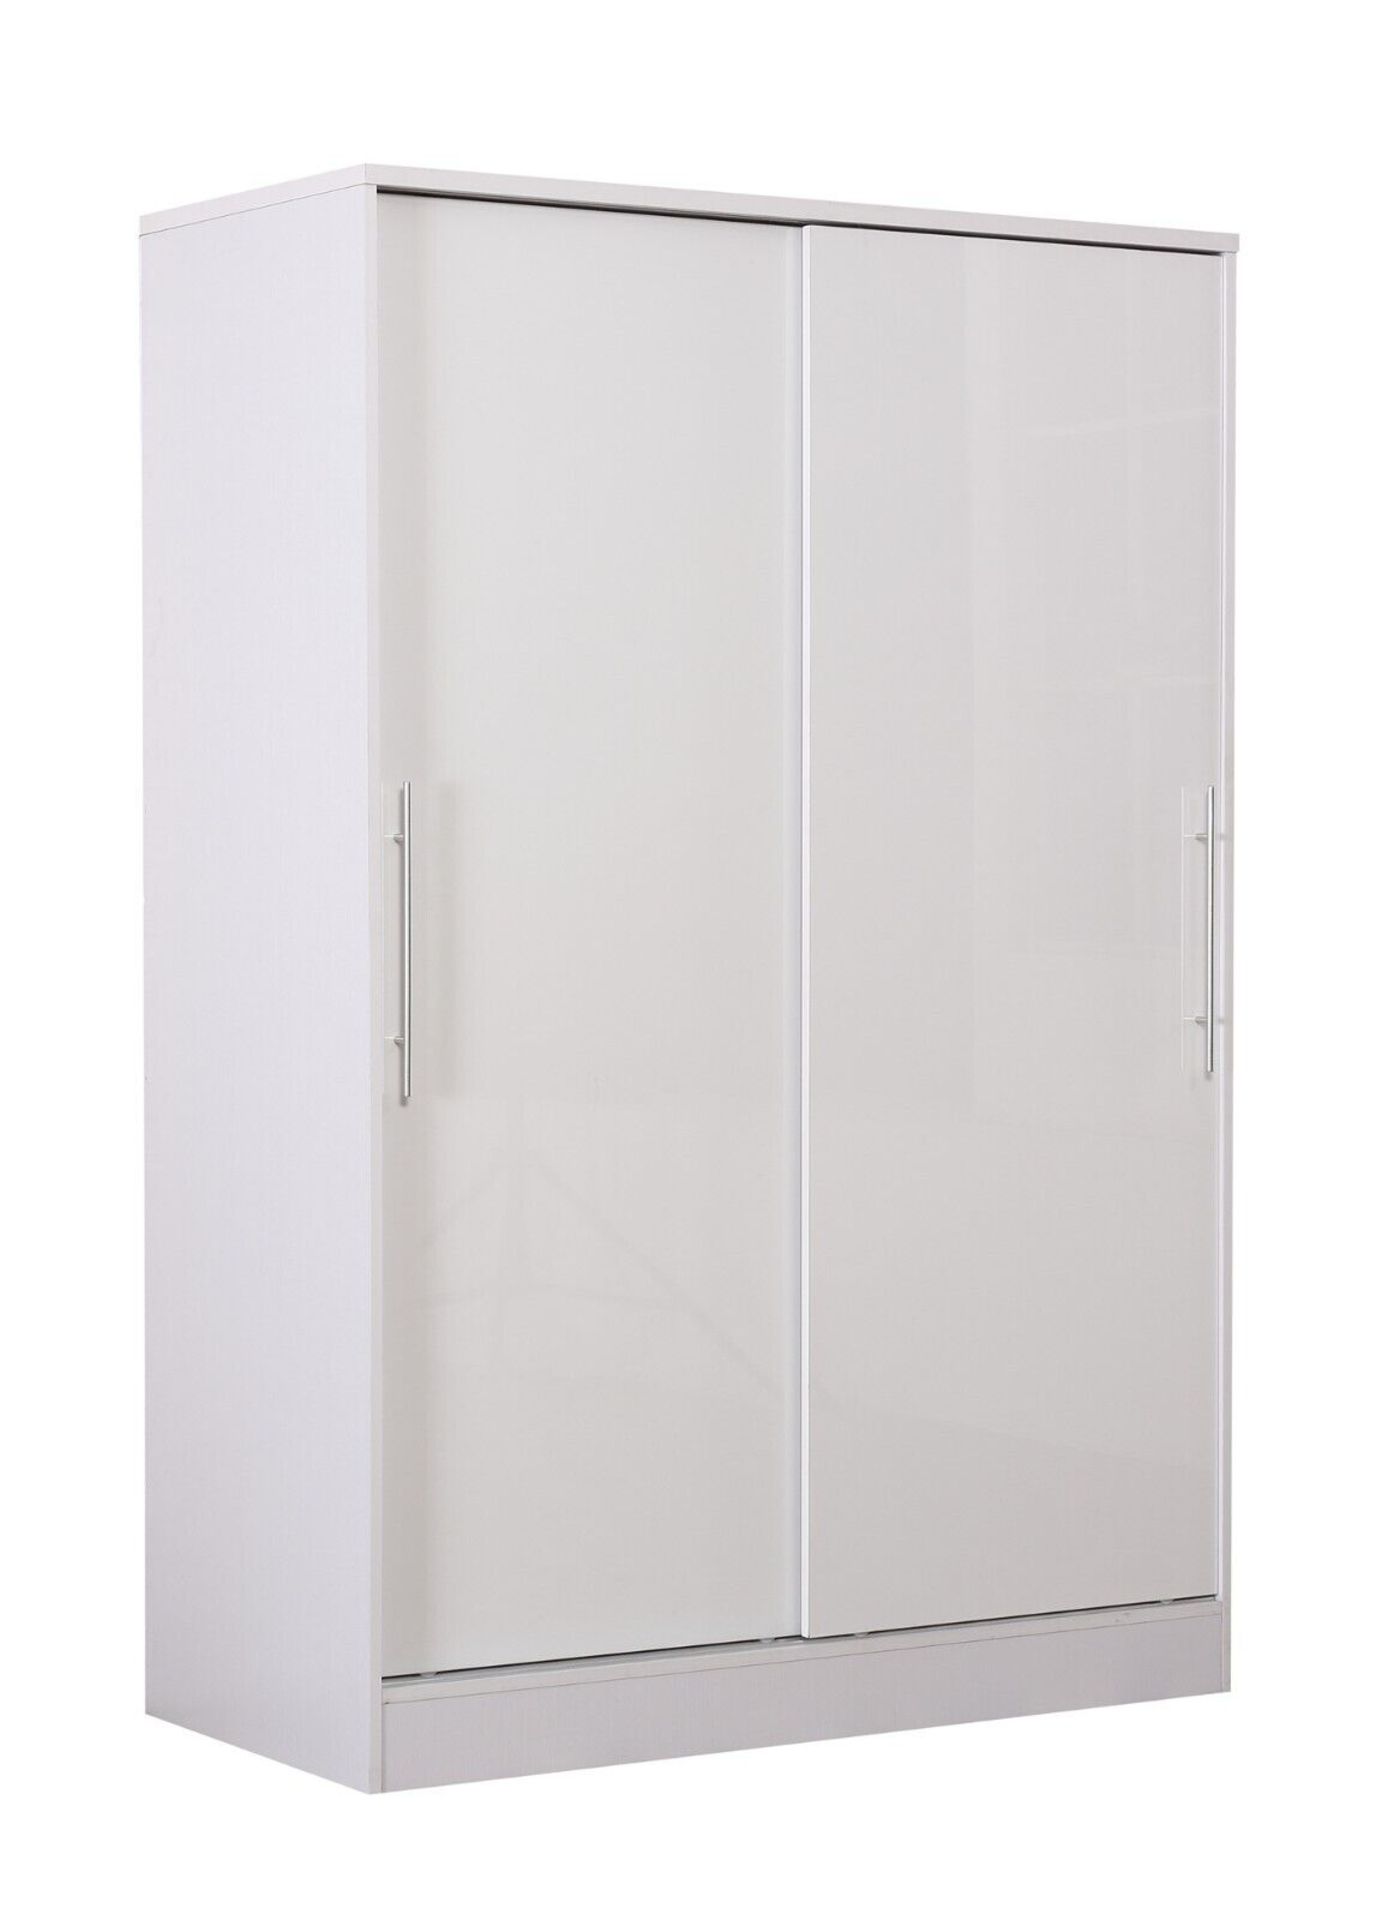 2 DOOR SLIDING WARDROBE XL HIGH GLOSS BEDROOM FURNITURE WHITE ON WHITE - Image 8 of 8